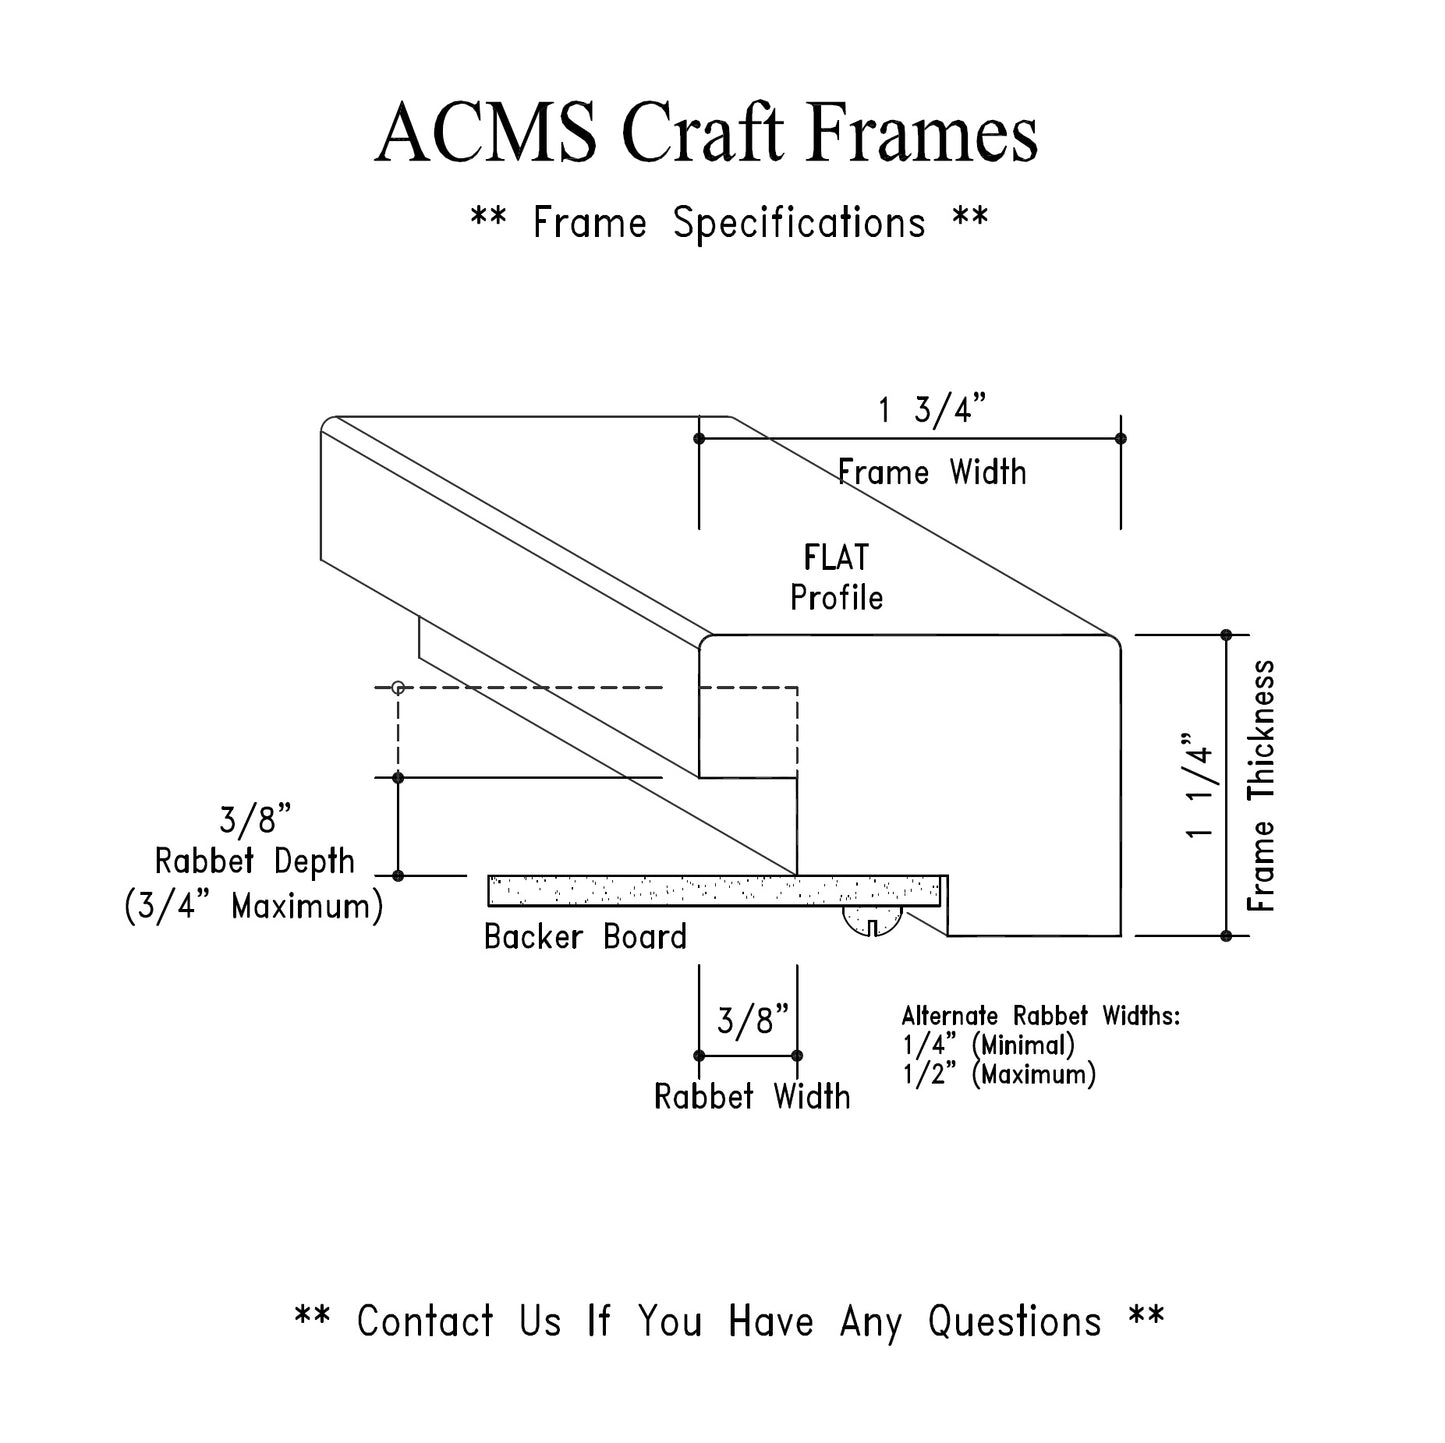 Round Craft Frame - 1 1/4" Thick - 1 3/4" FLAT Profile